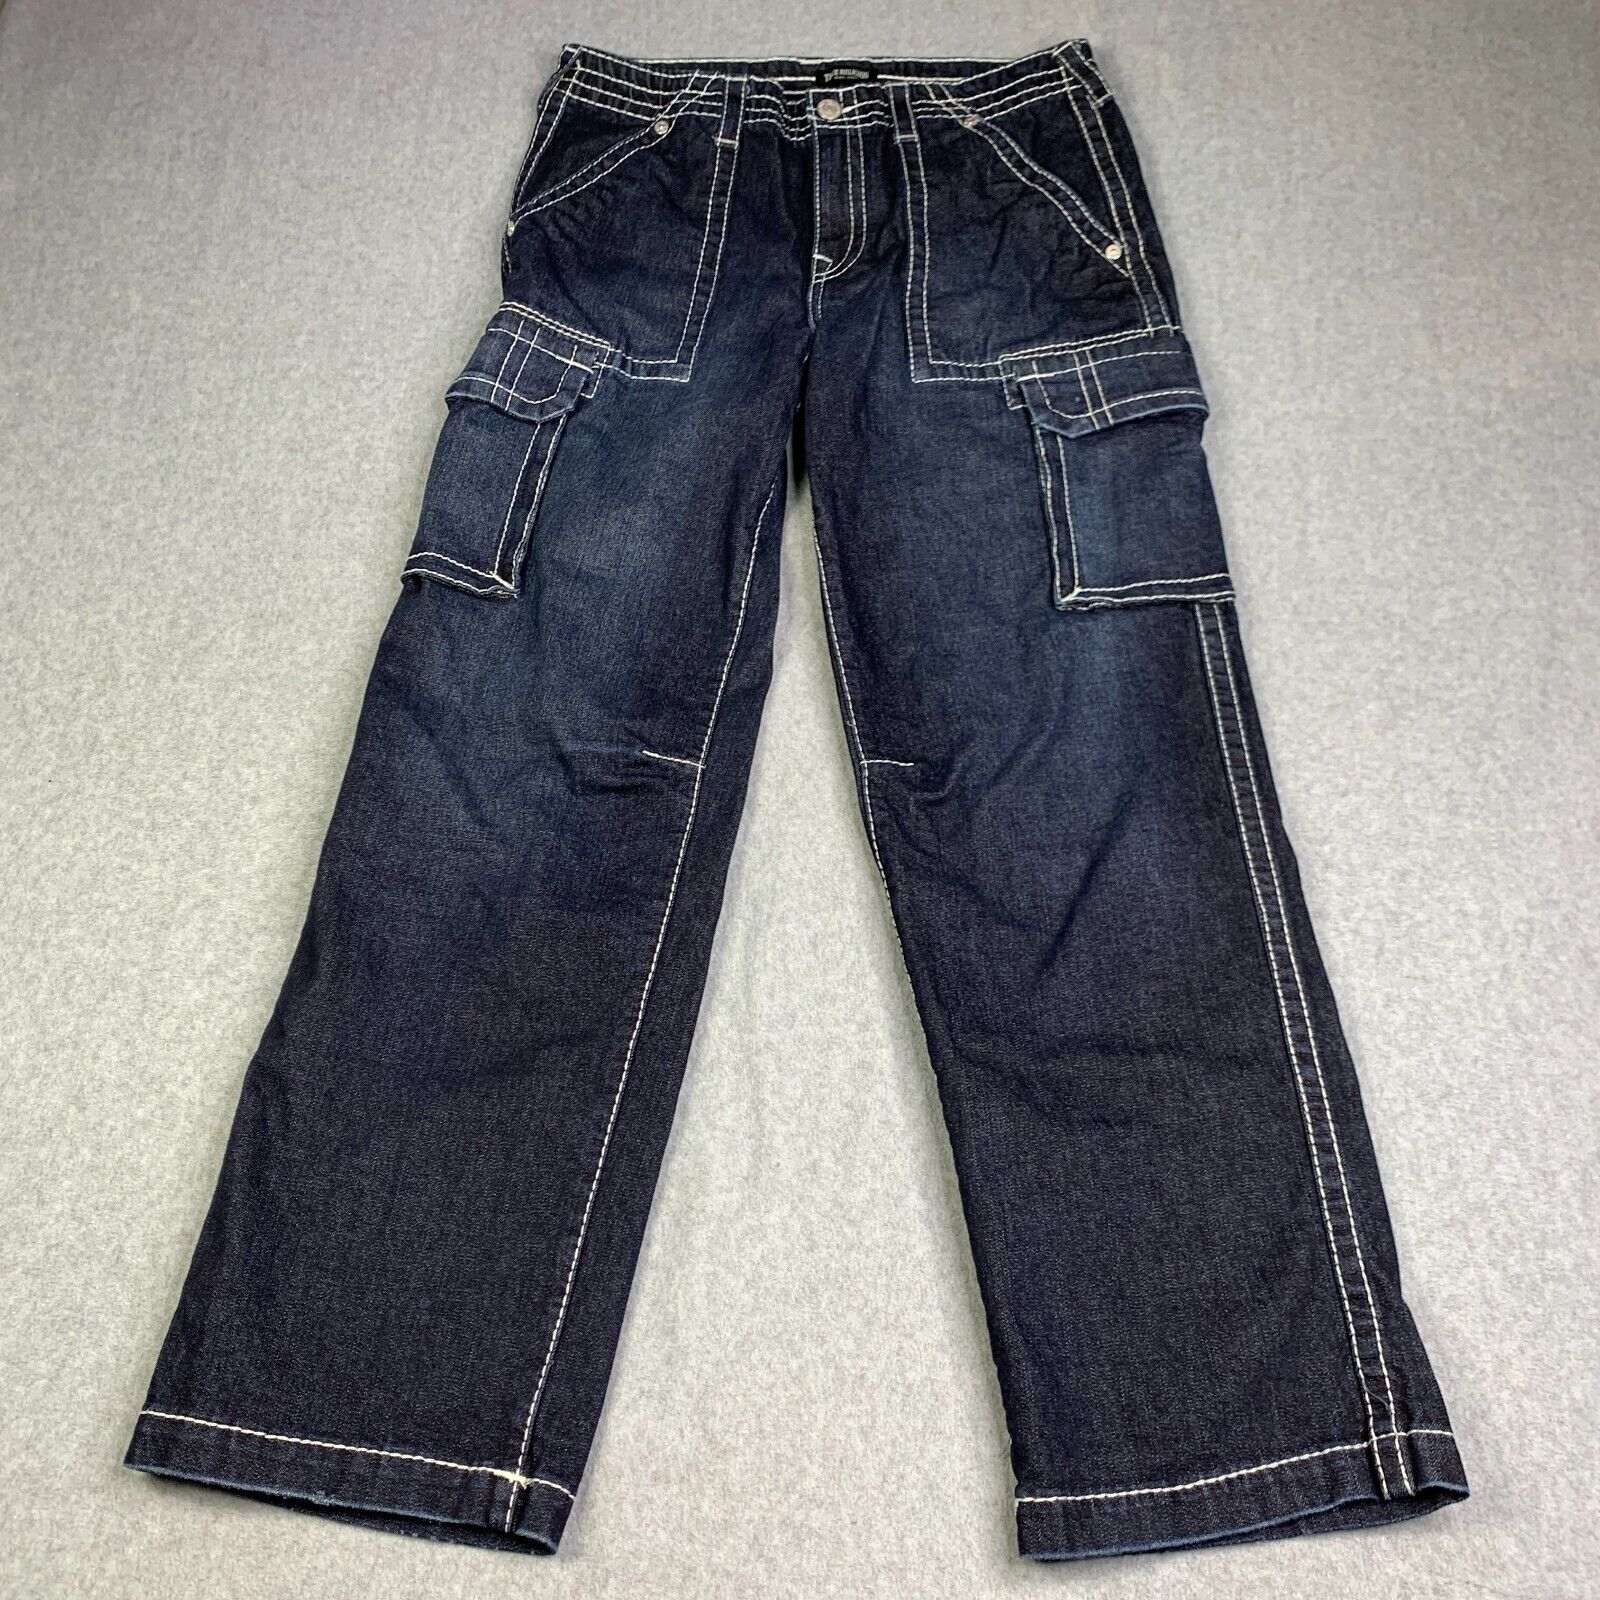 True Religion Pants Mens 35x31 Dark Wash Cargo Jeans Distressed Big Stitch